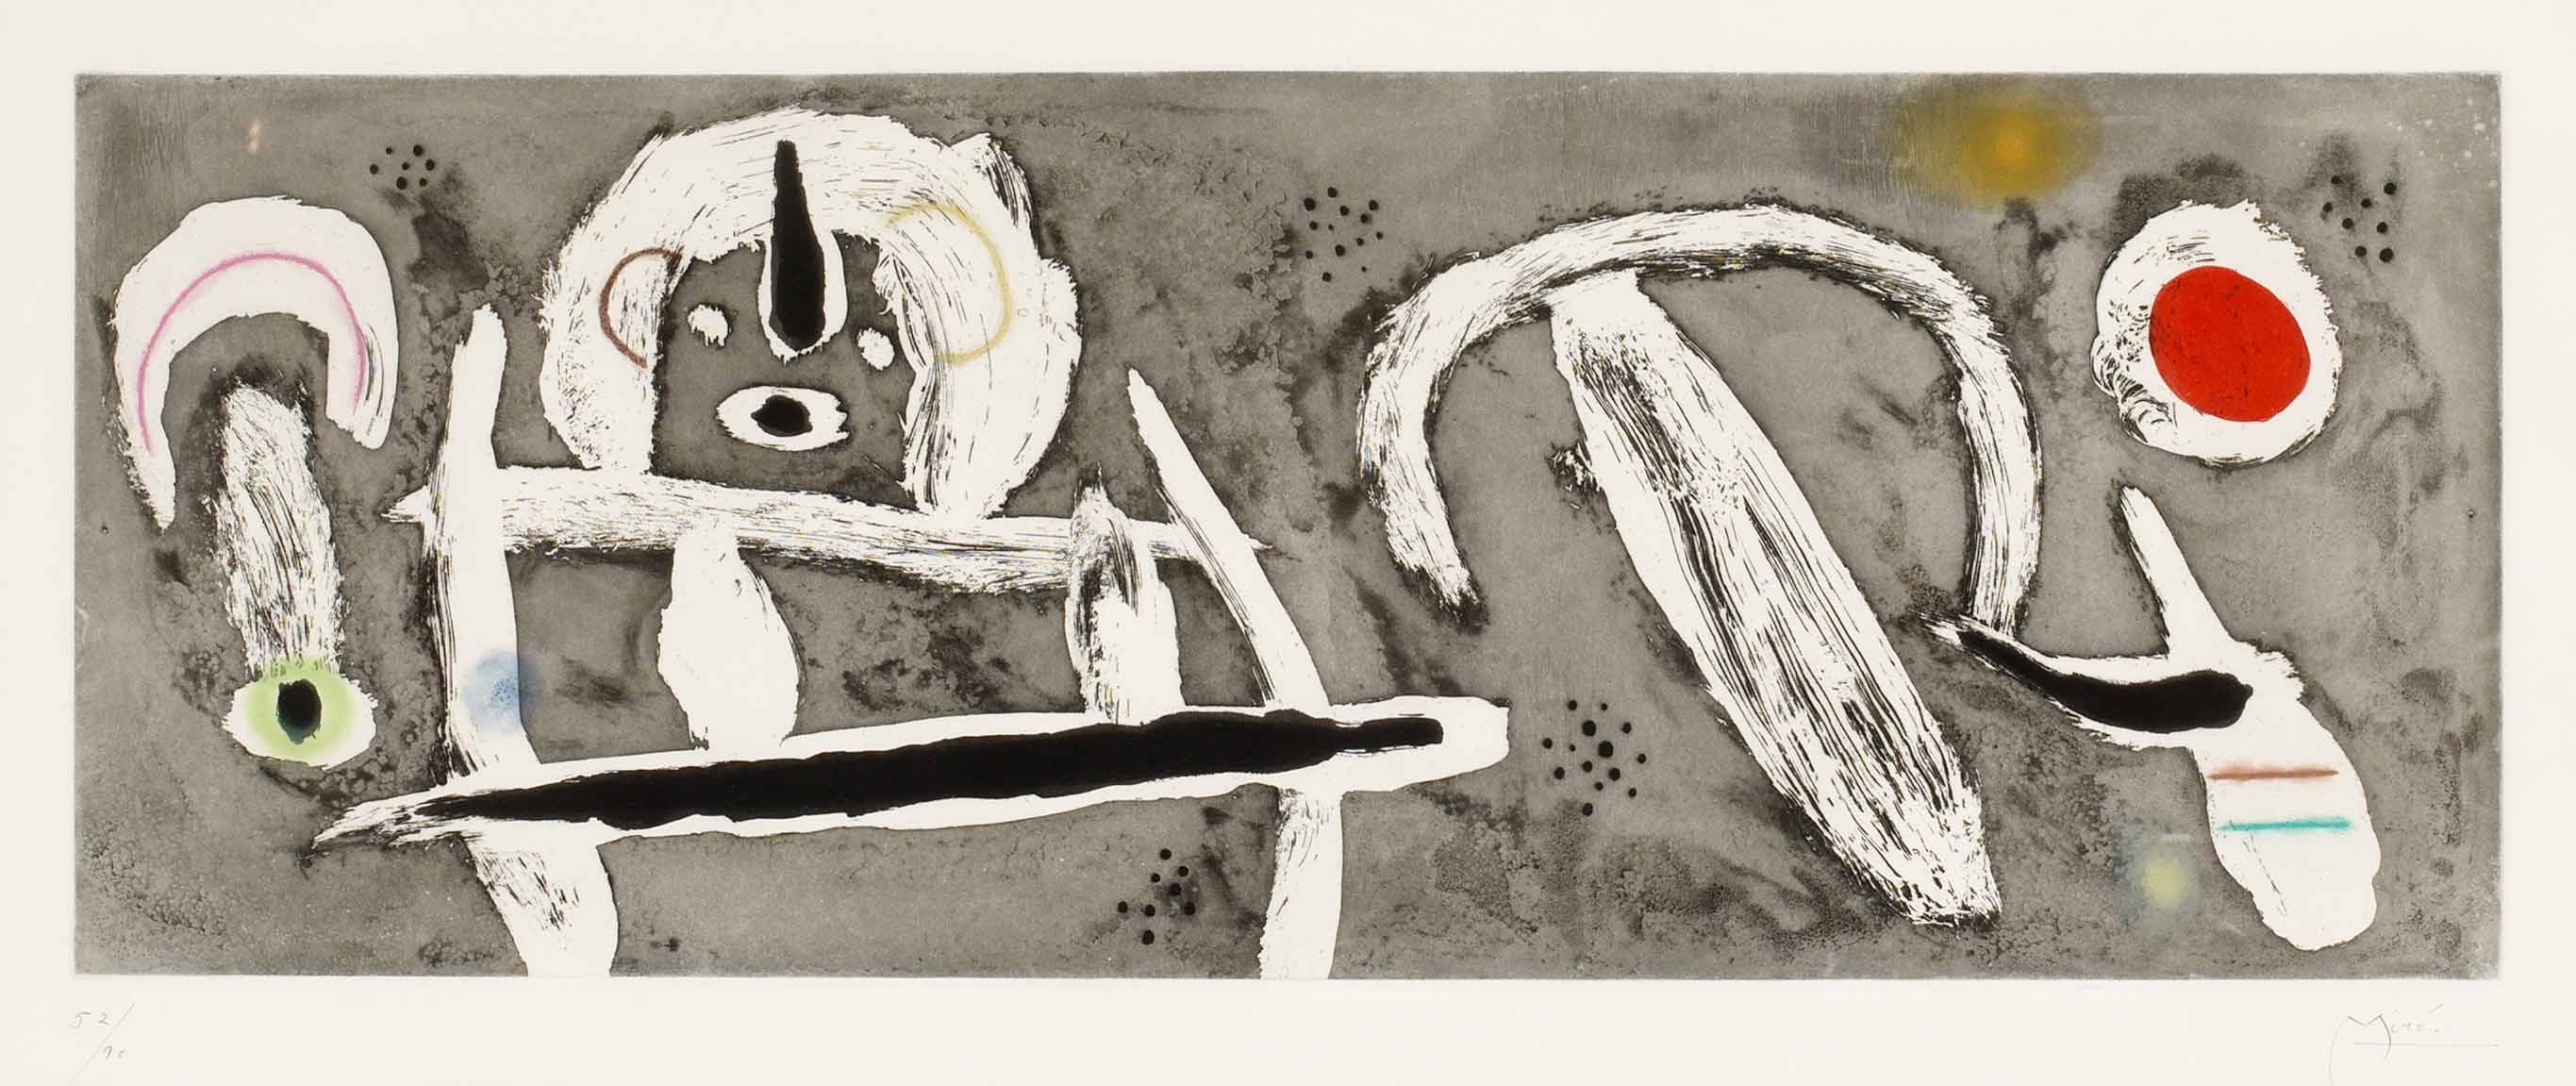 GRAND VENT by Joan Miró, 1960